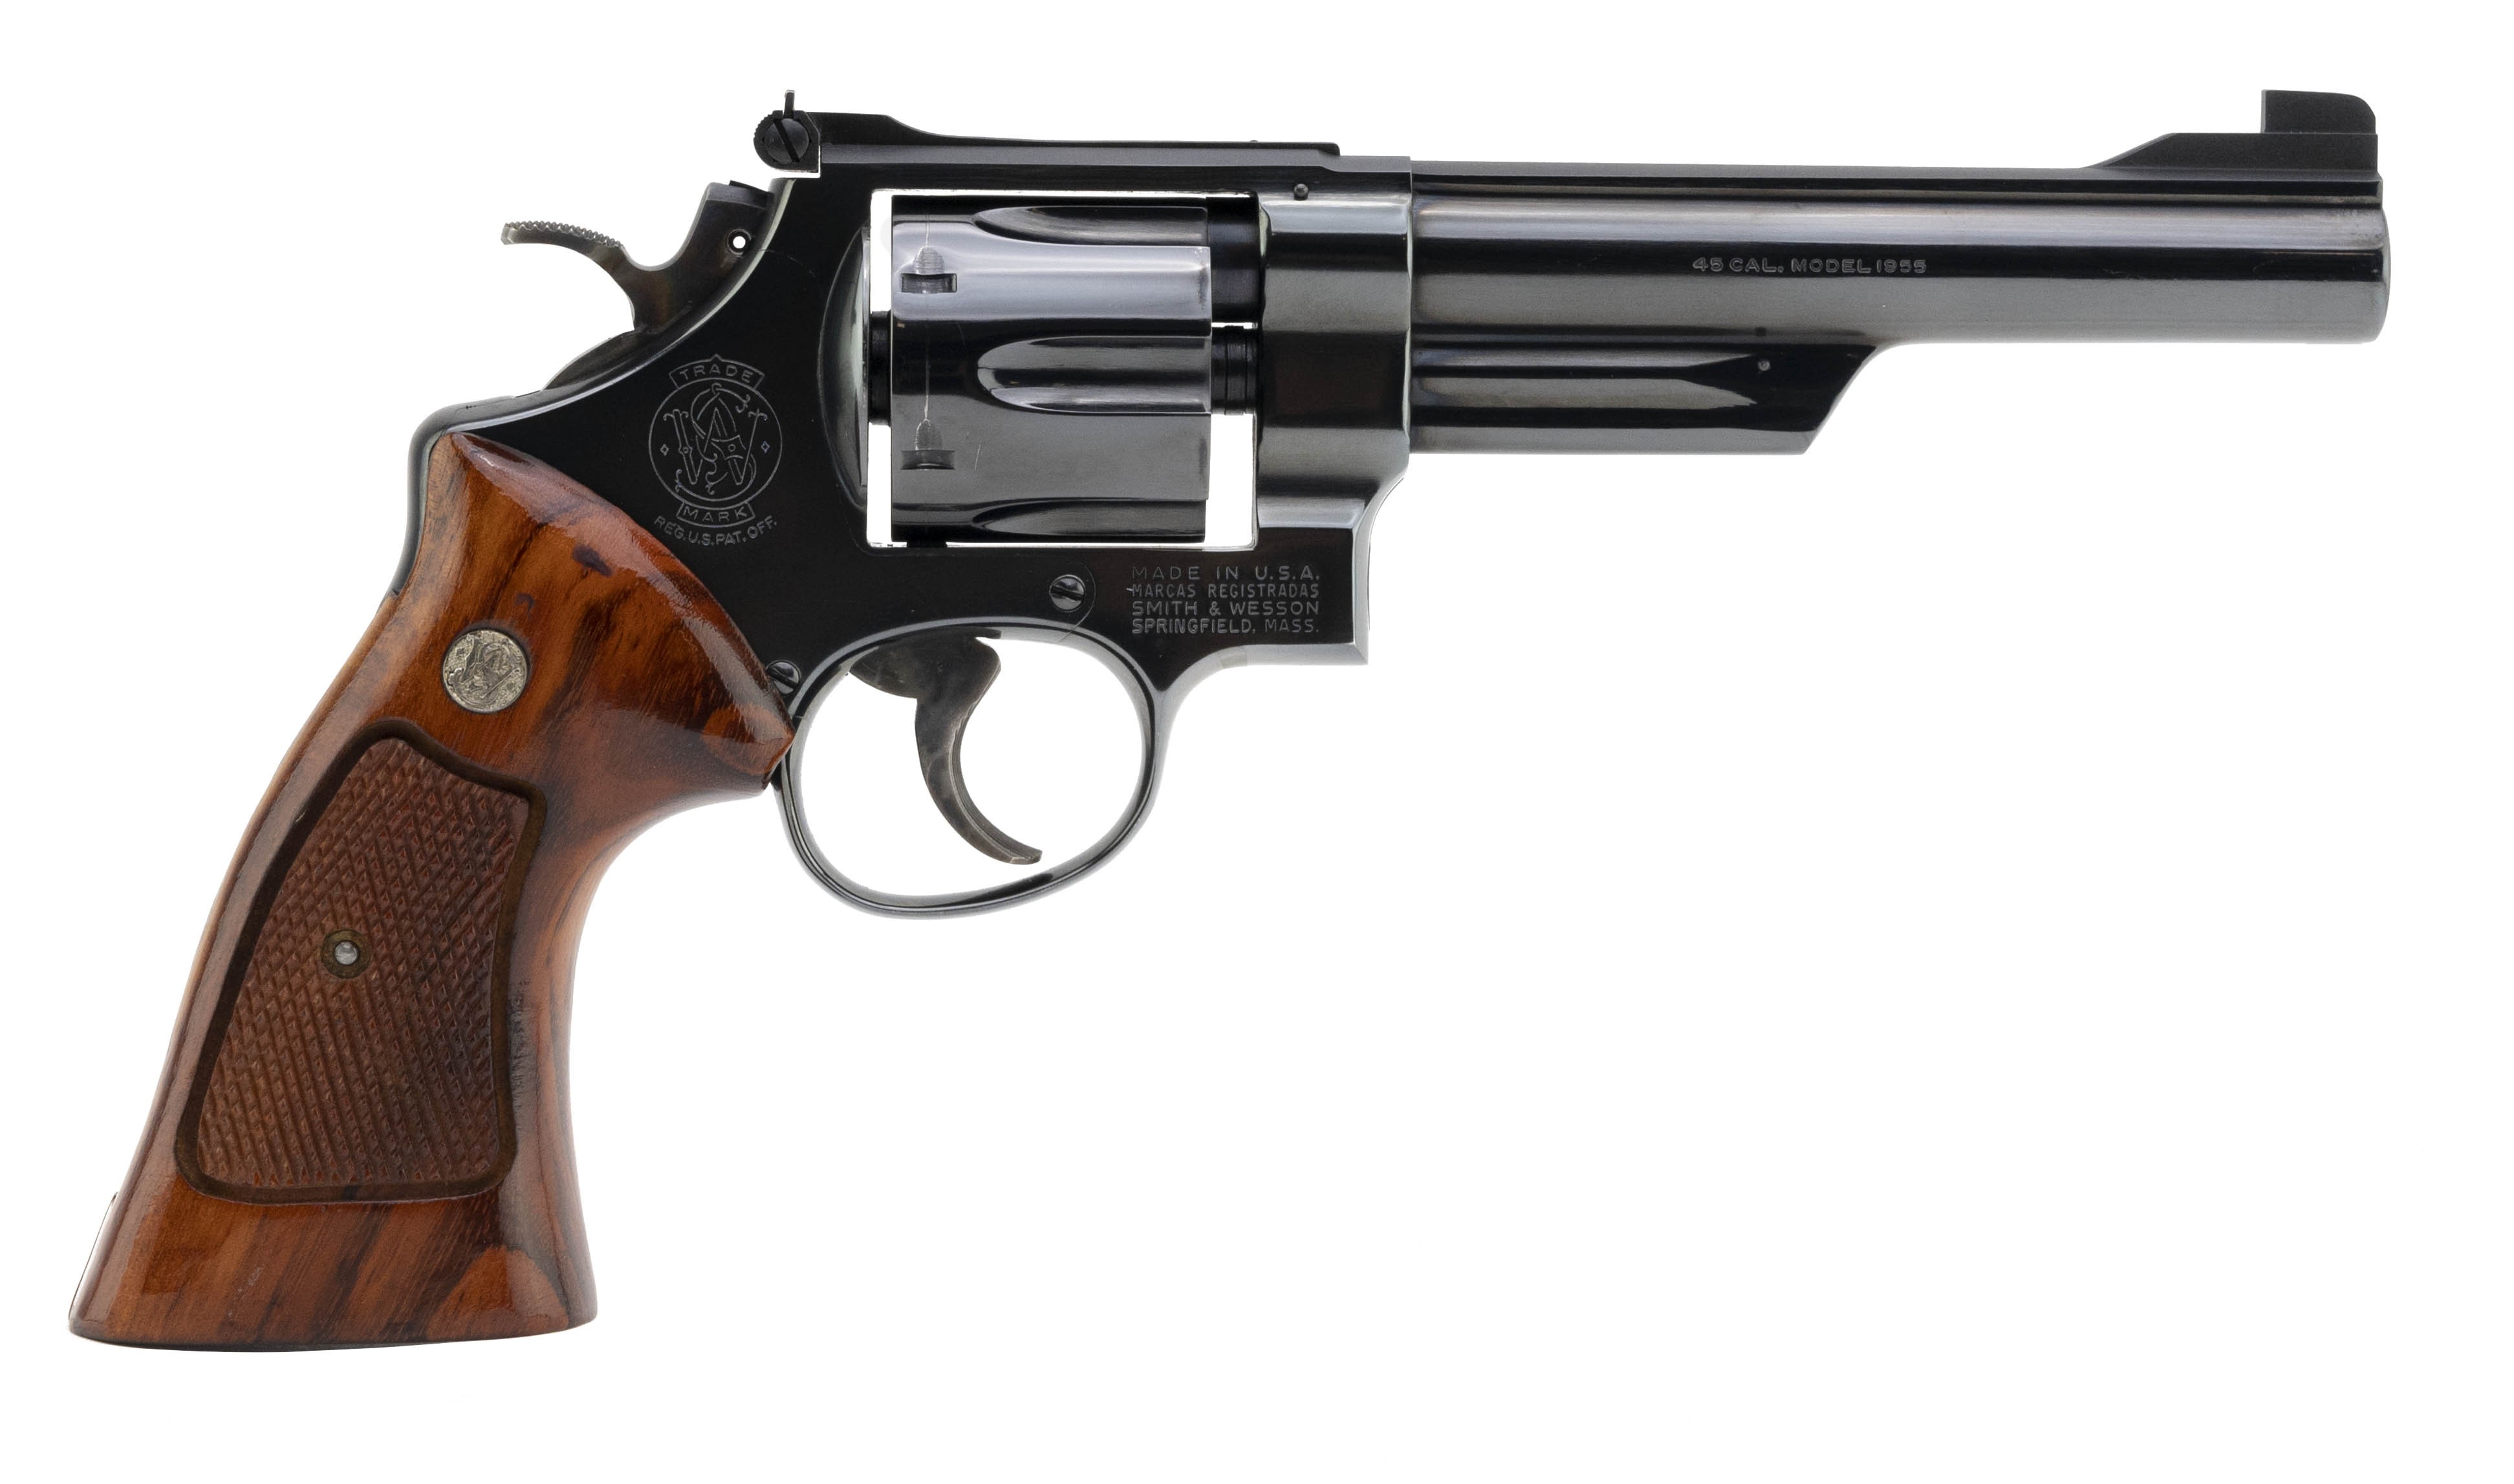 Smith & Wesson 252 .45 ACP caliber revolver for sale.